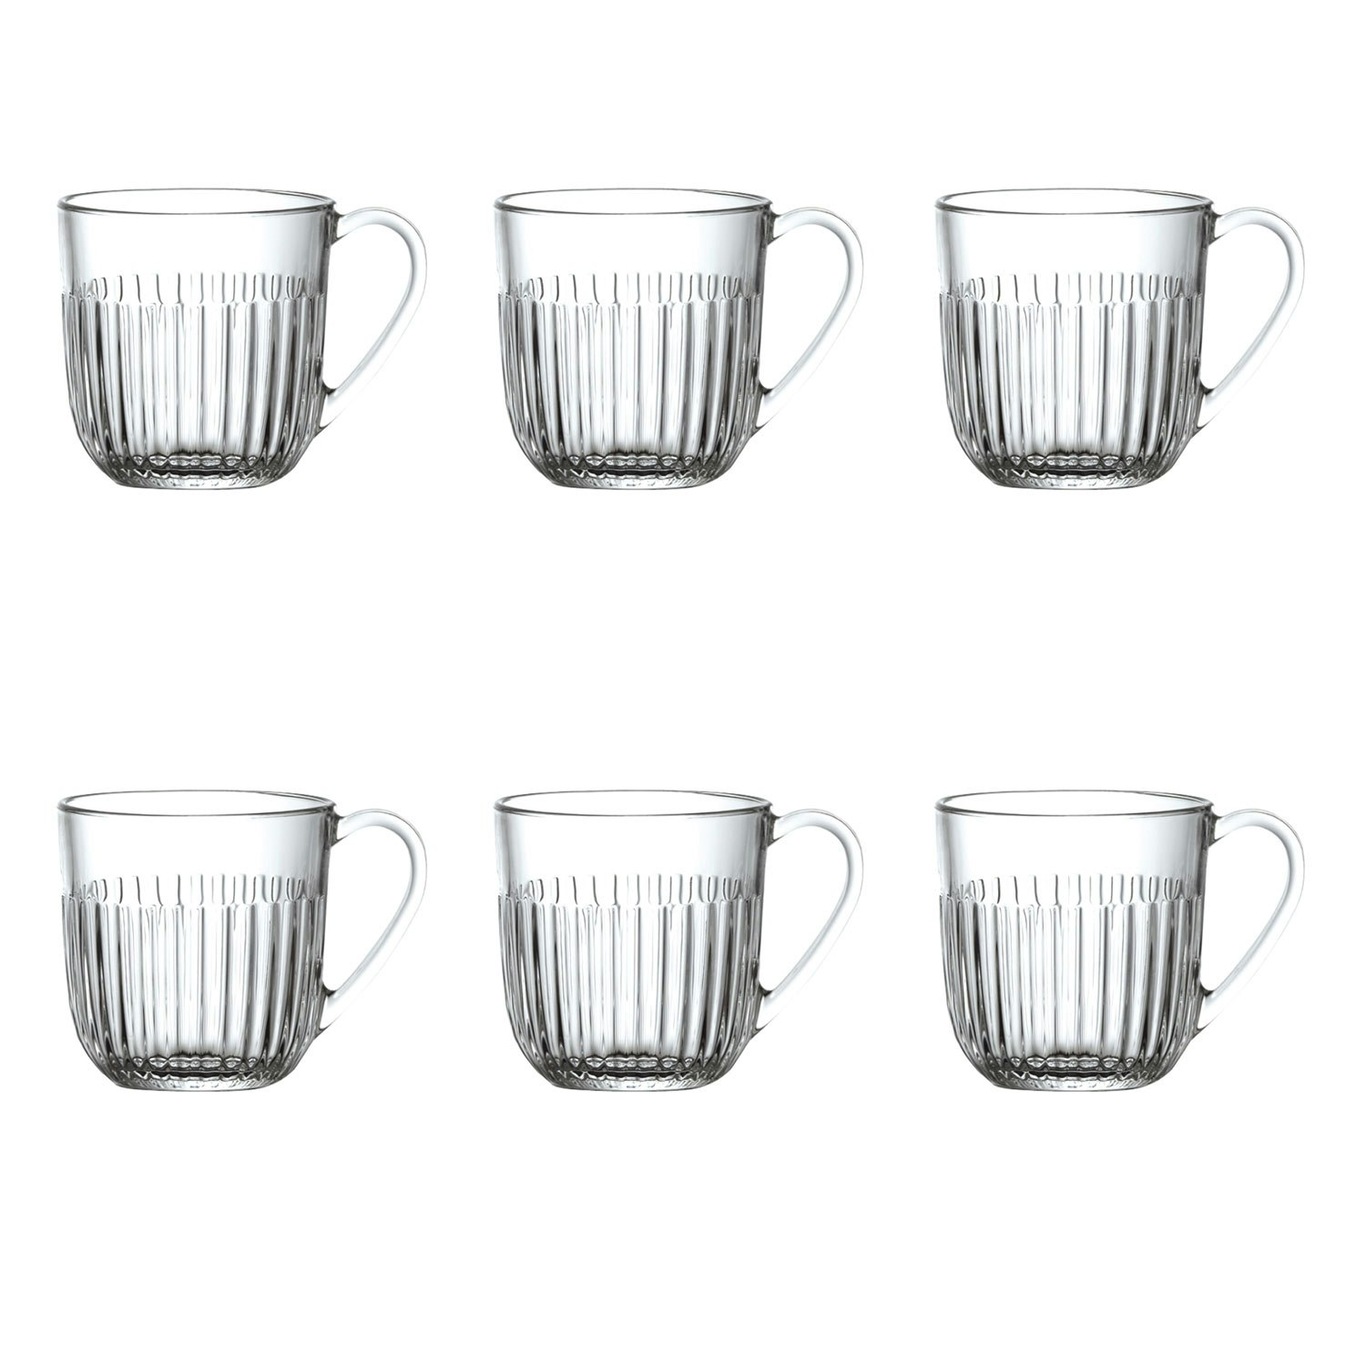 https://royaldesign.com/image/2/la-rochere-ouessant-coffee-mug-27-cl-6-pack-0?w=800&quality=80